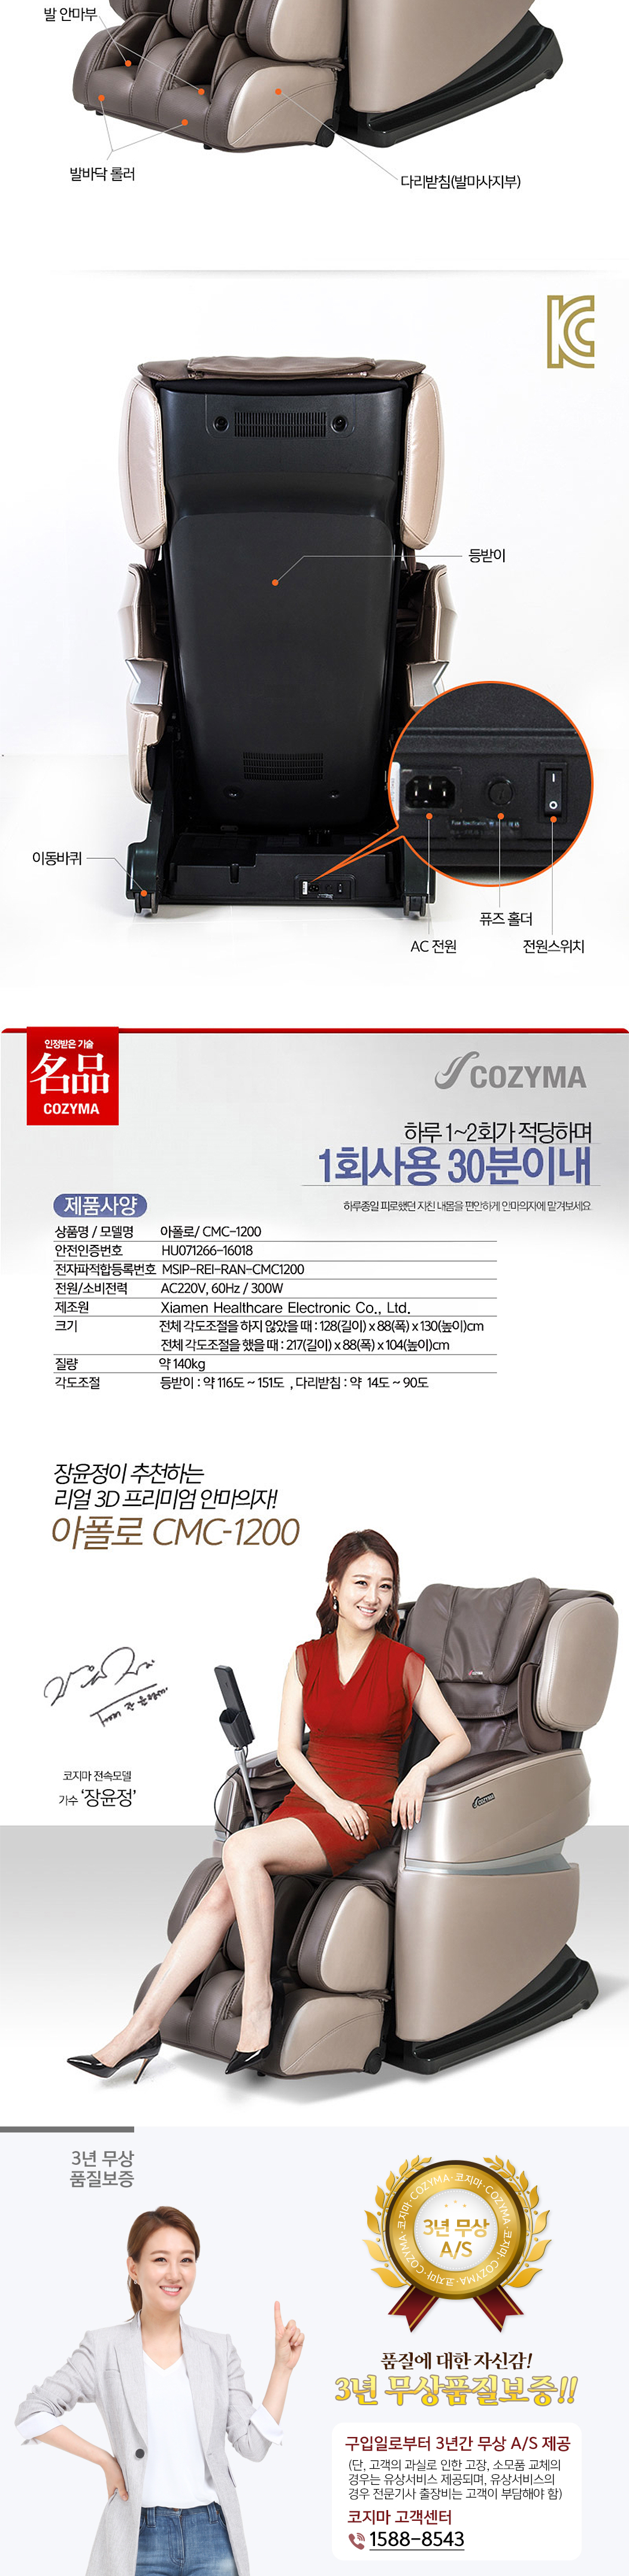 cozyma_CMC1200-11.jpg